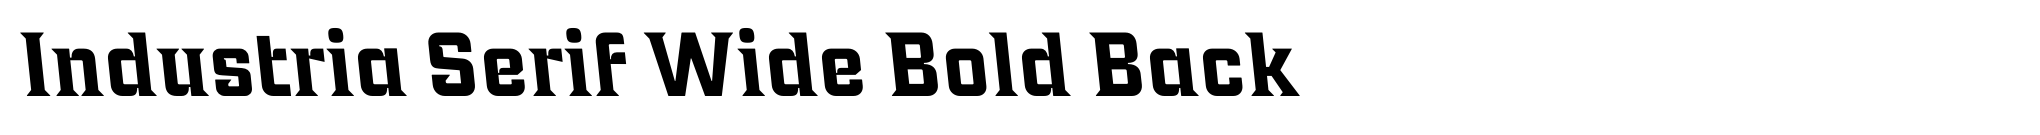 Industria Serif Wide Bold Back image